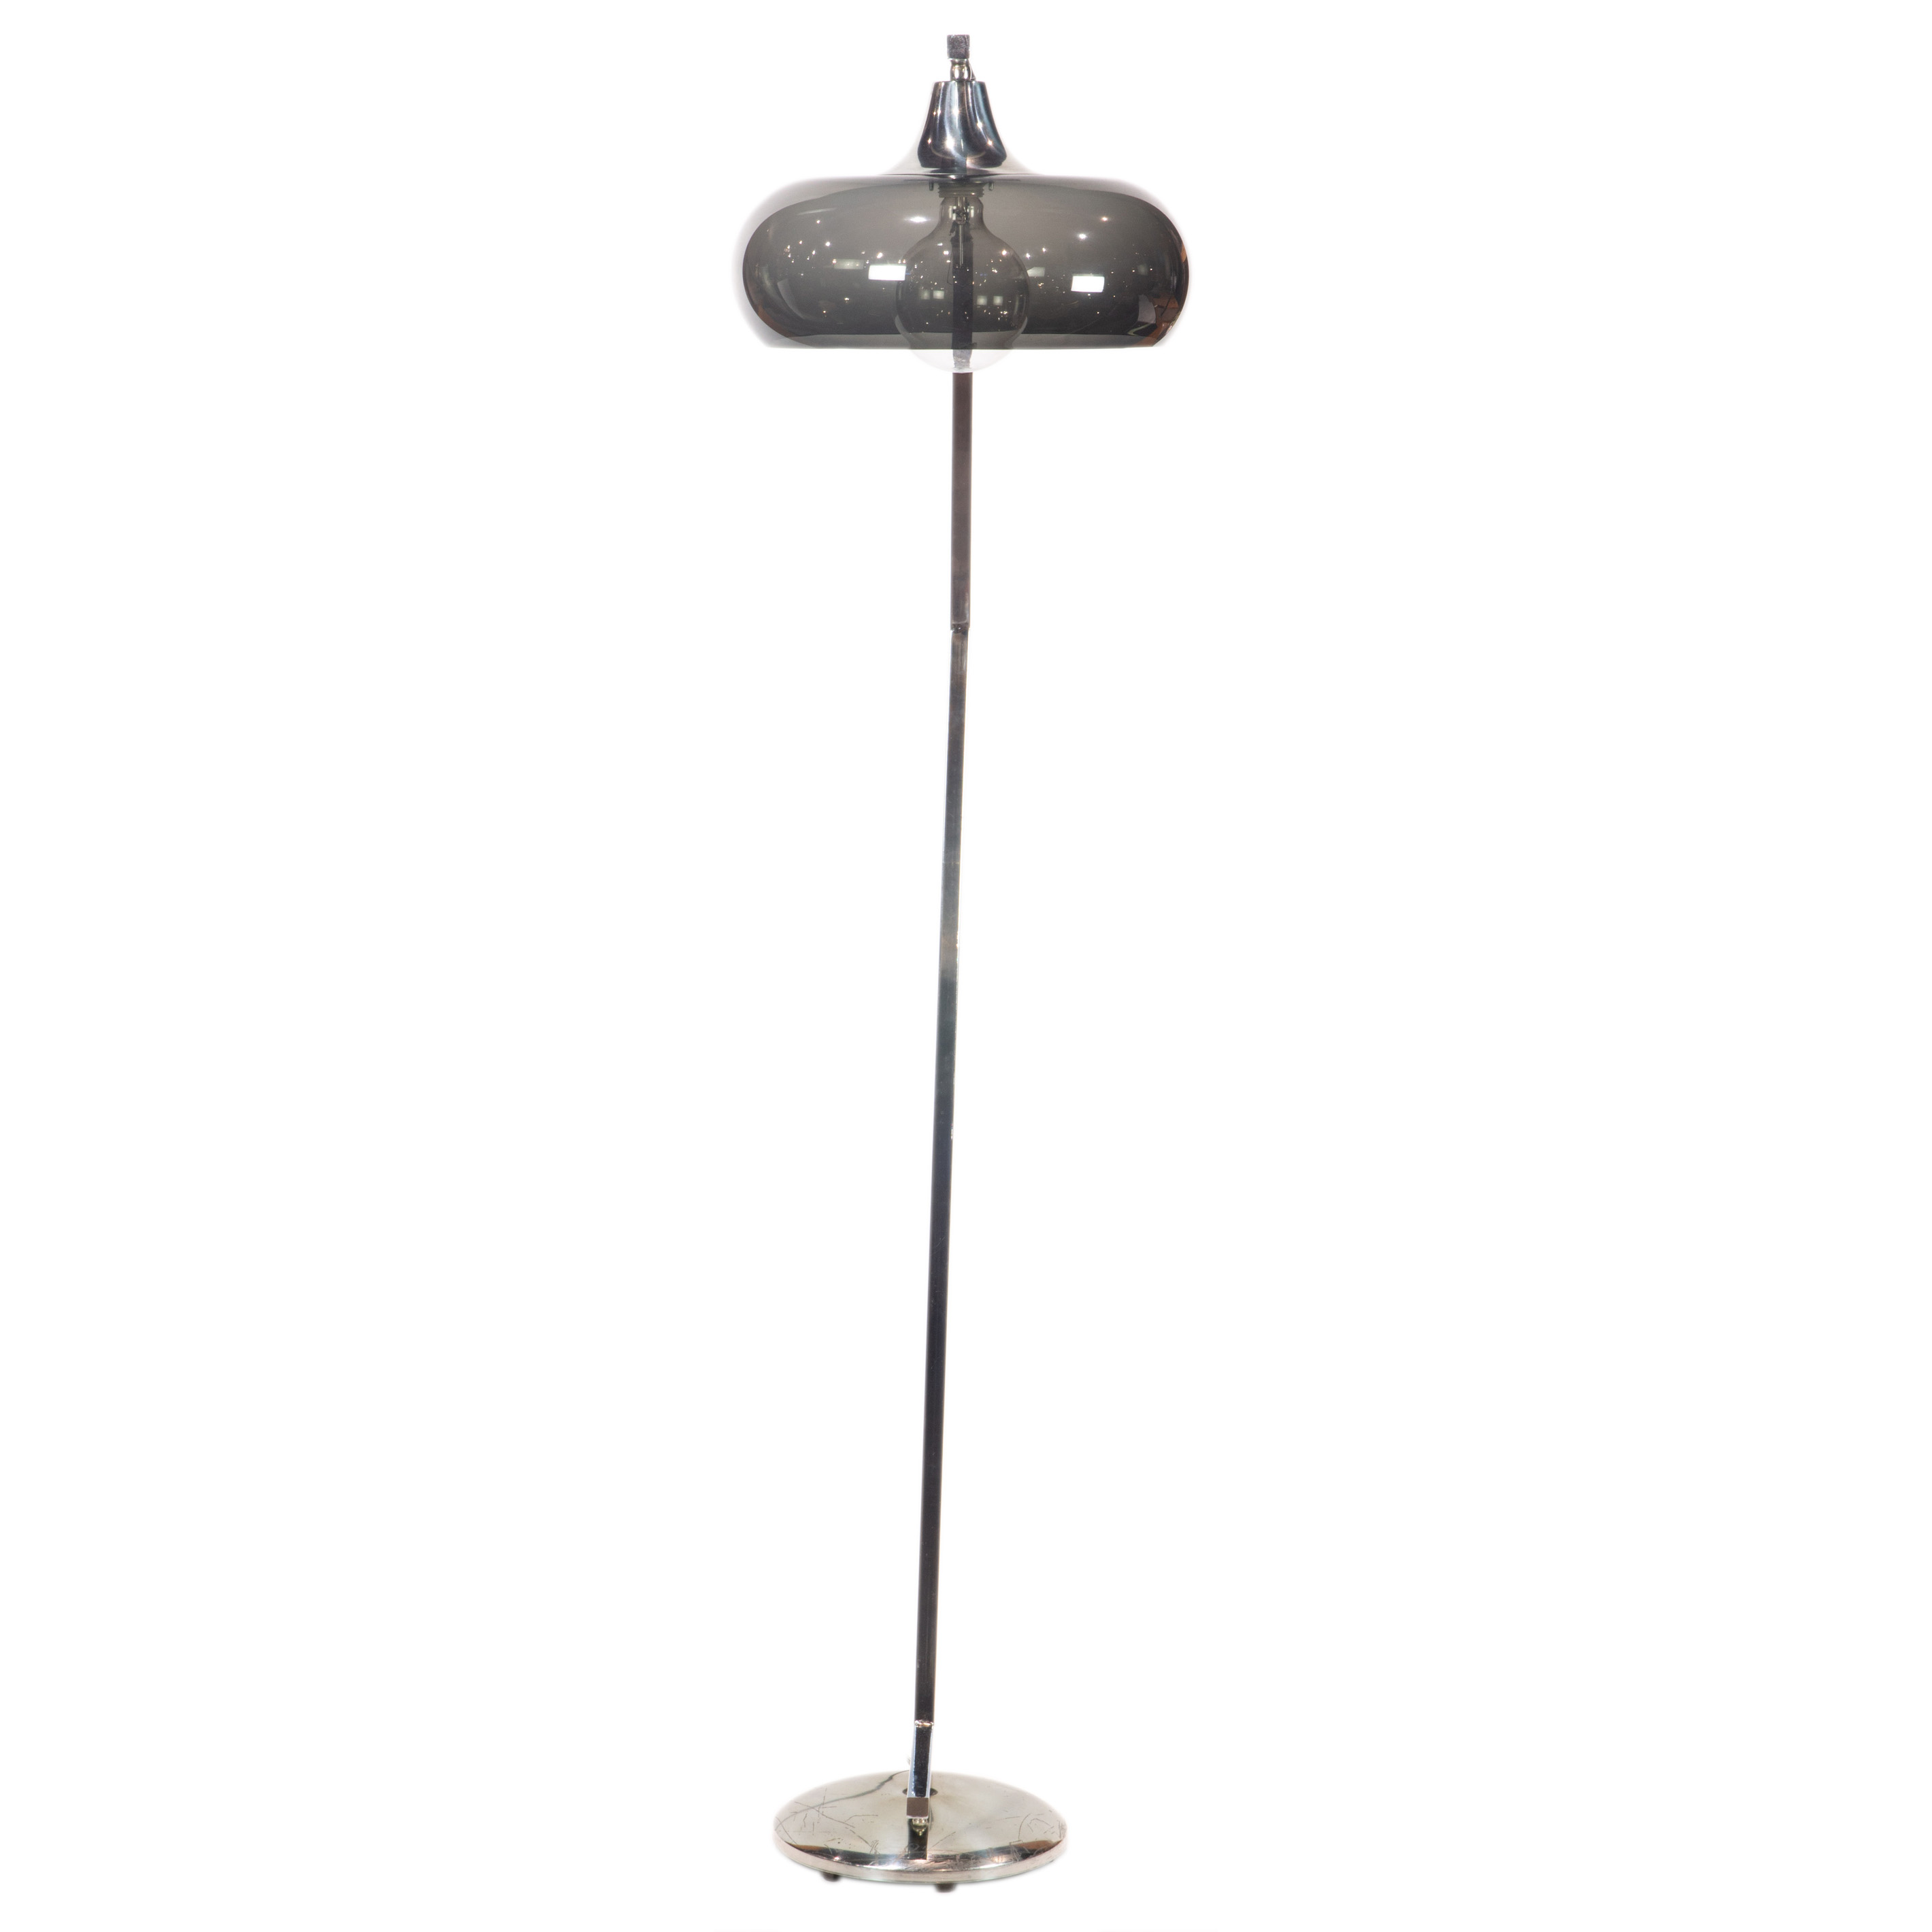 A MODERN CHROME FLOOR LAMP A Modern